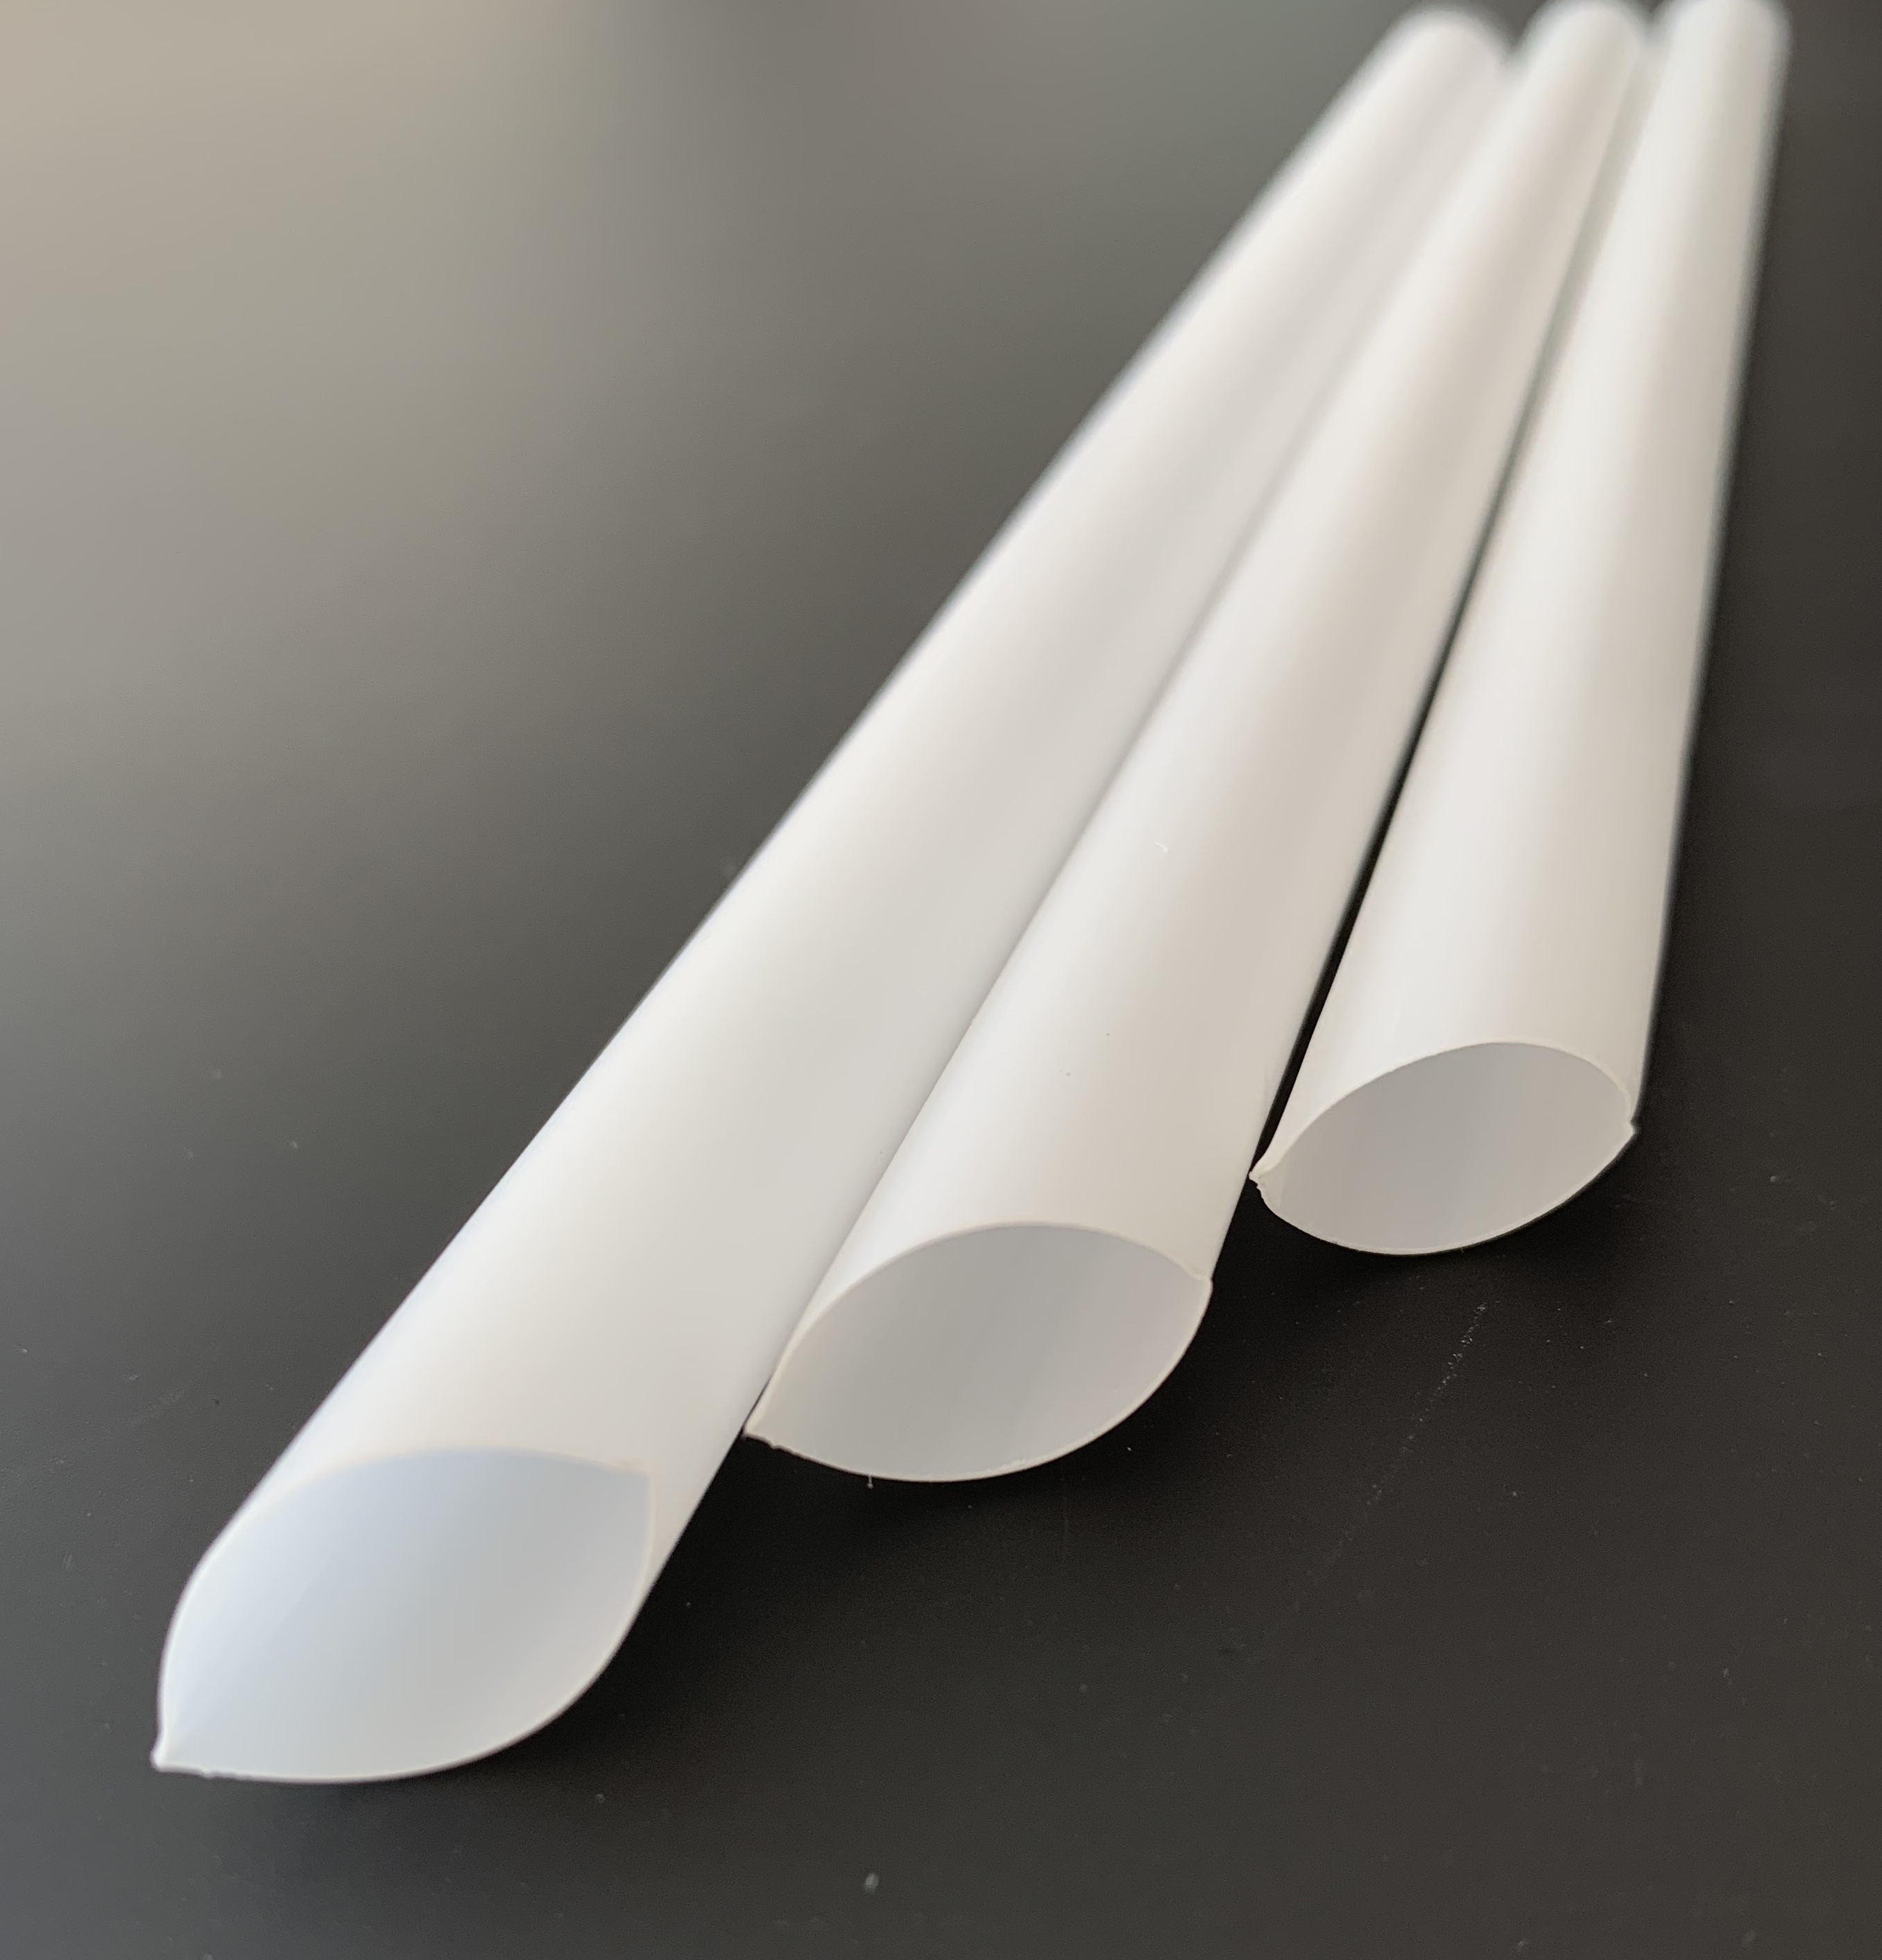 12mm-PLA Heat-Resistant Compostable Jumbo Straw